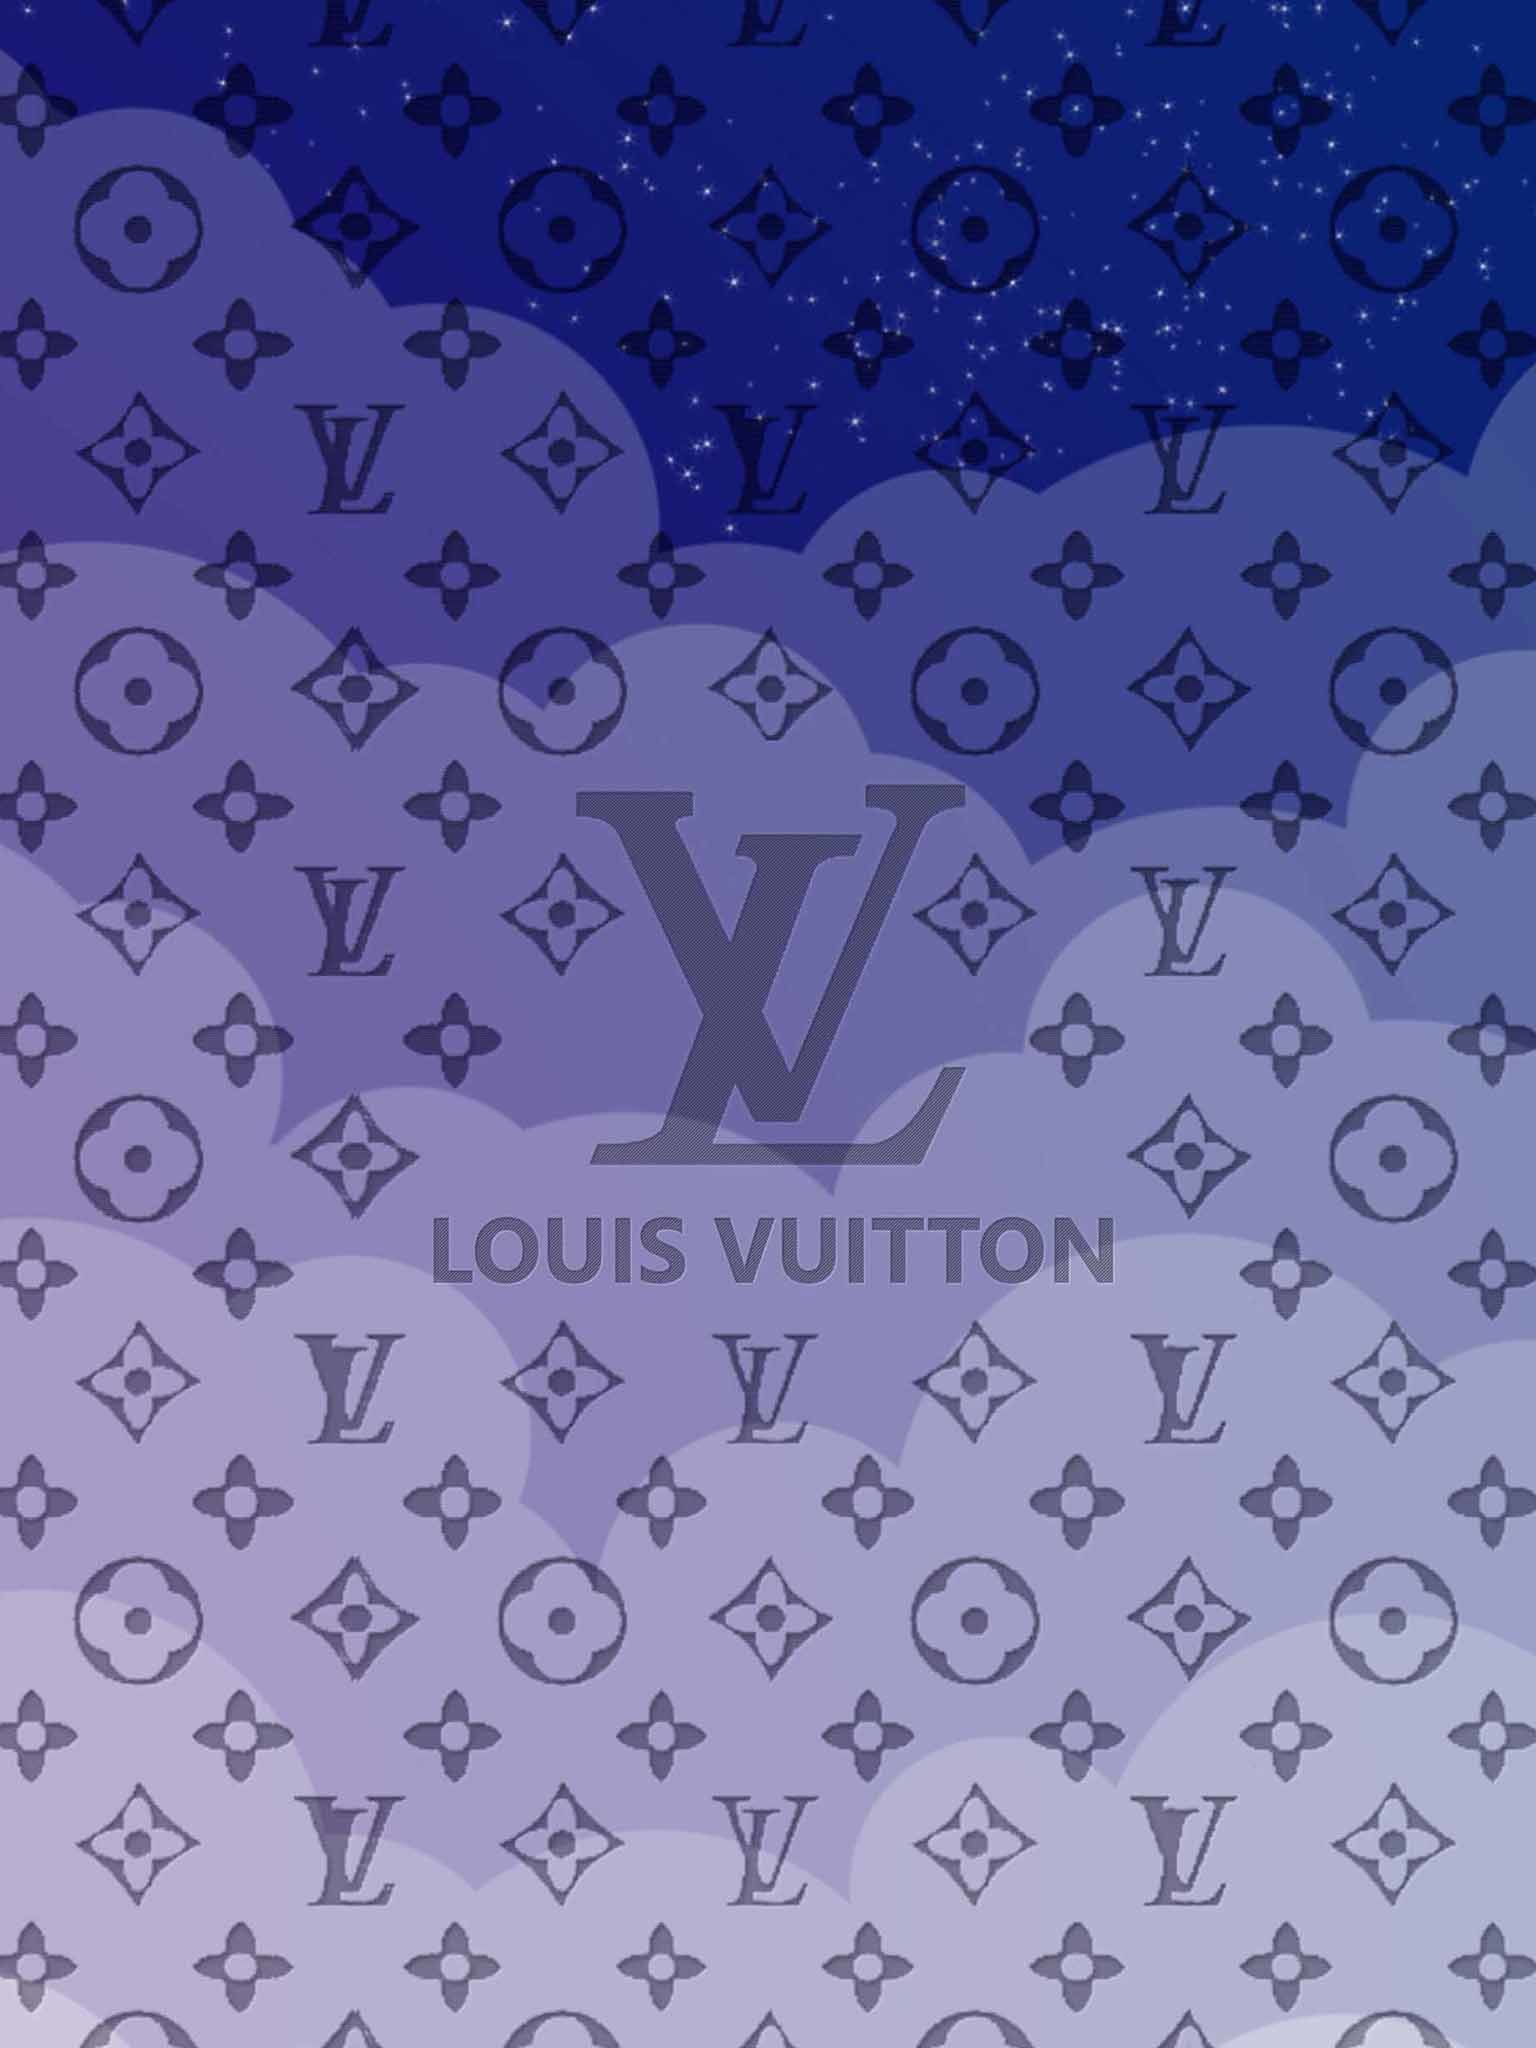 Supreme Louis Vuitton Wallpaper Iphone 6 The Art Of Mike Mignola